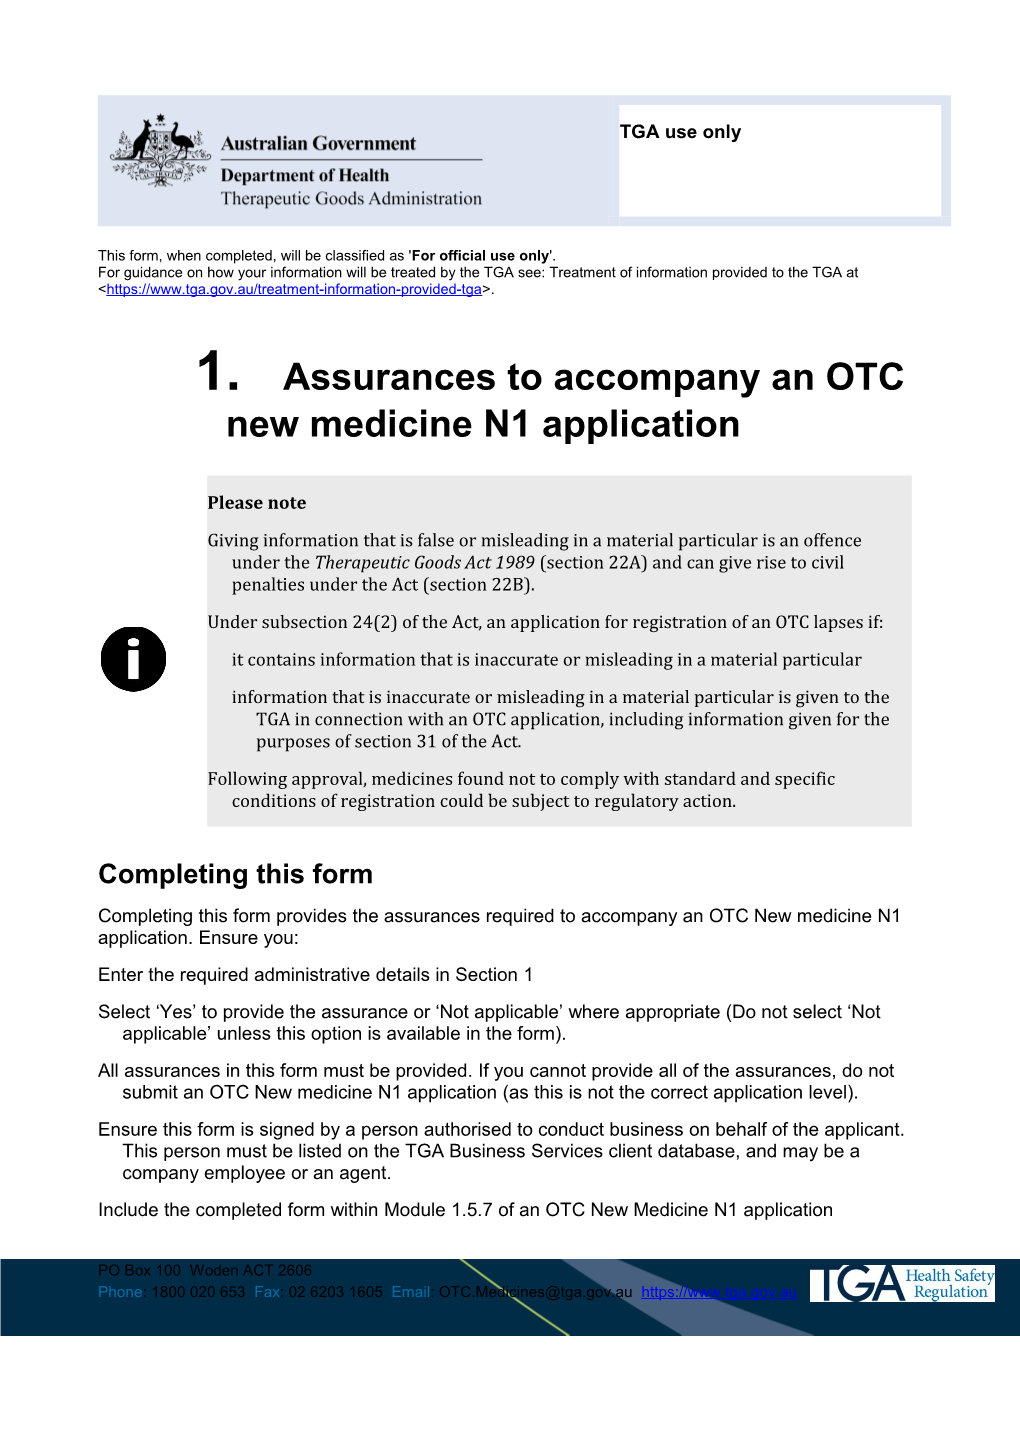 Assurances to Accompany an OTC New Medicine N1 Application